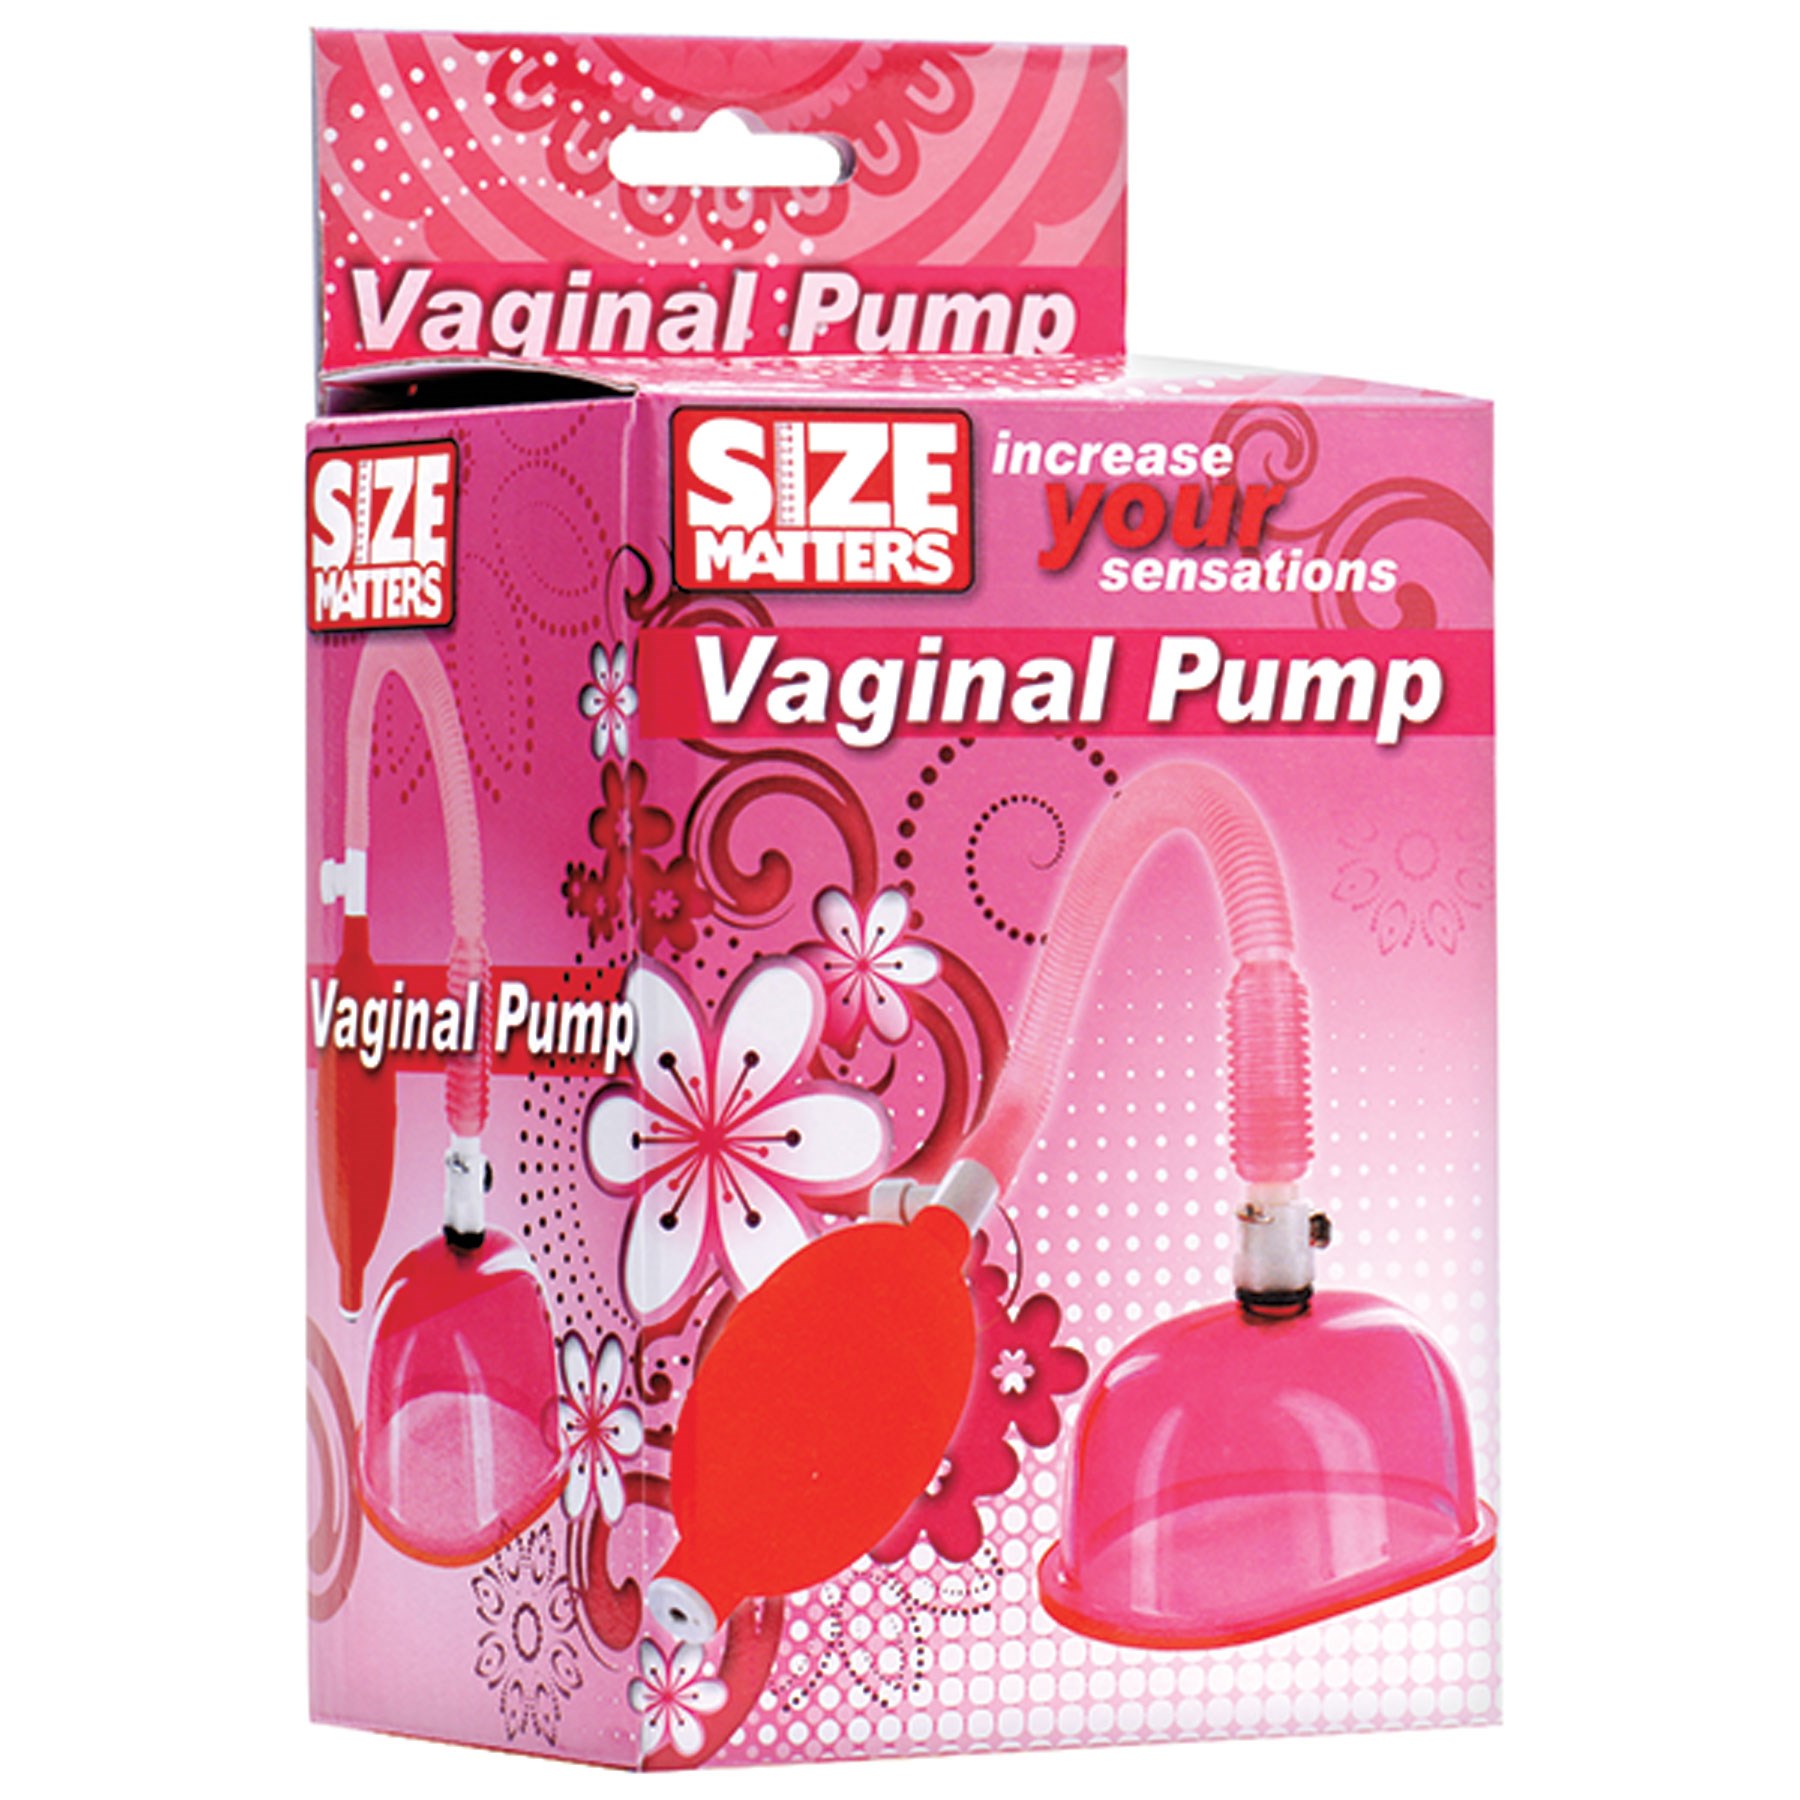 Size Matters Vaginal Pump box